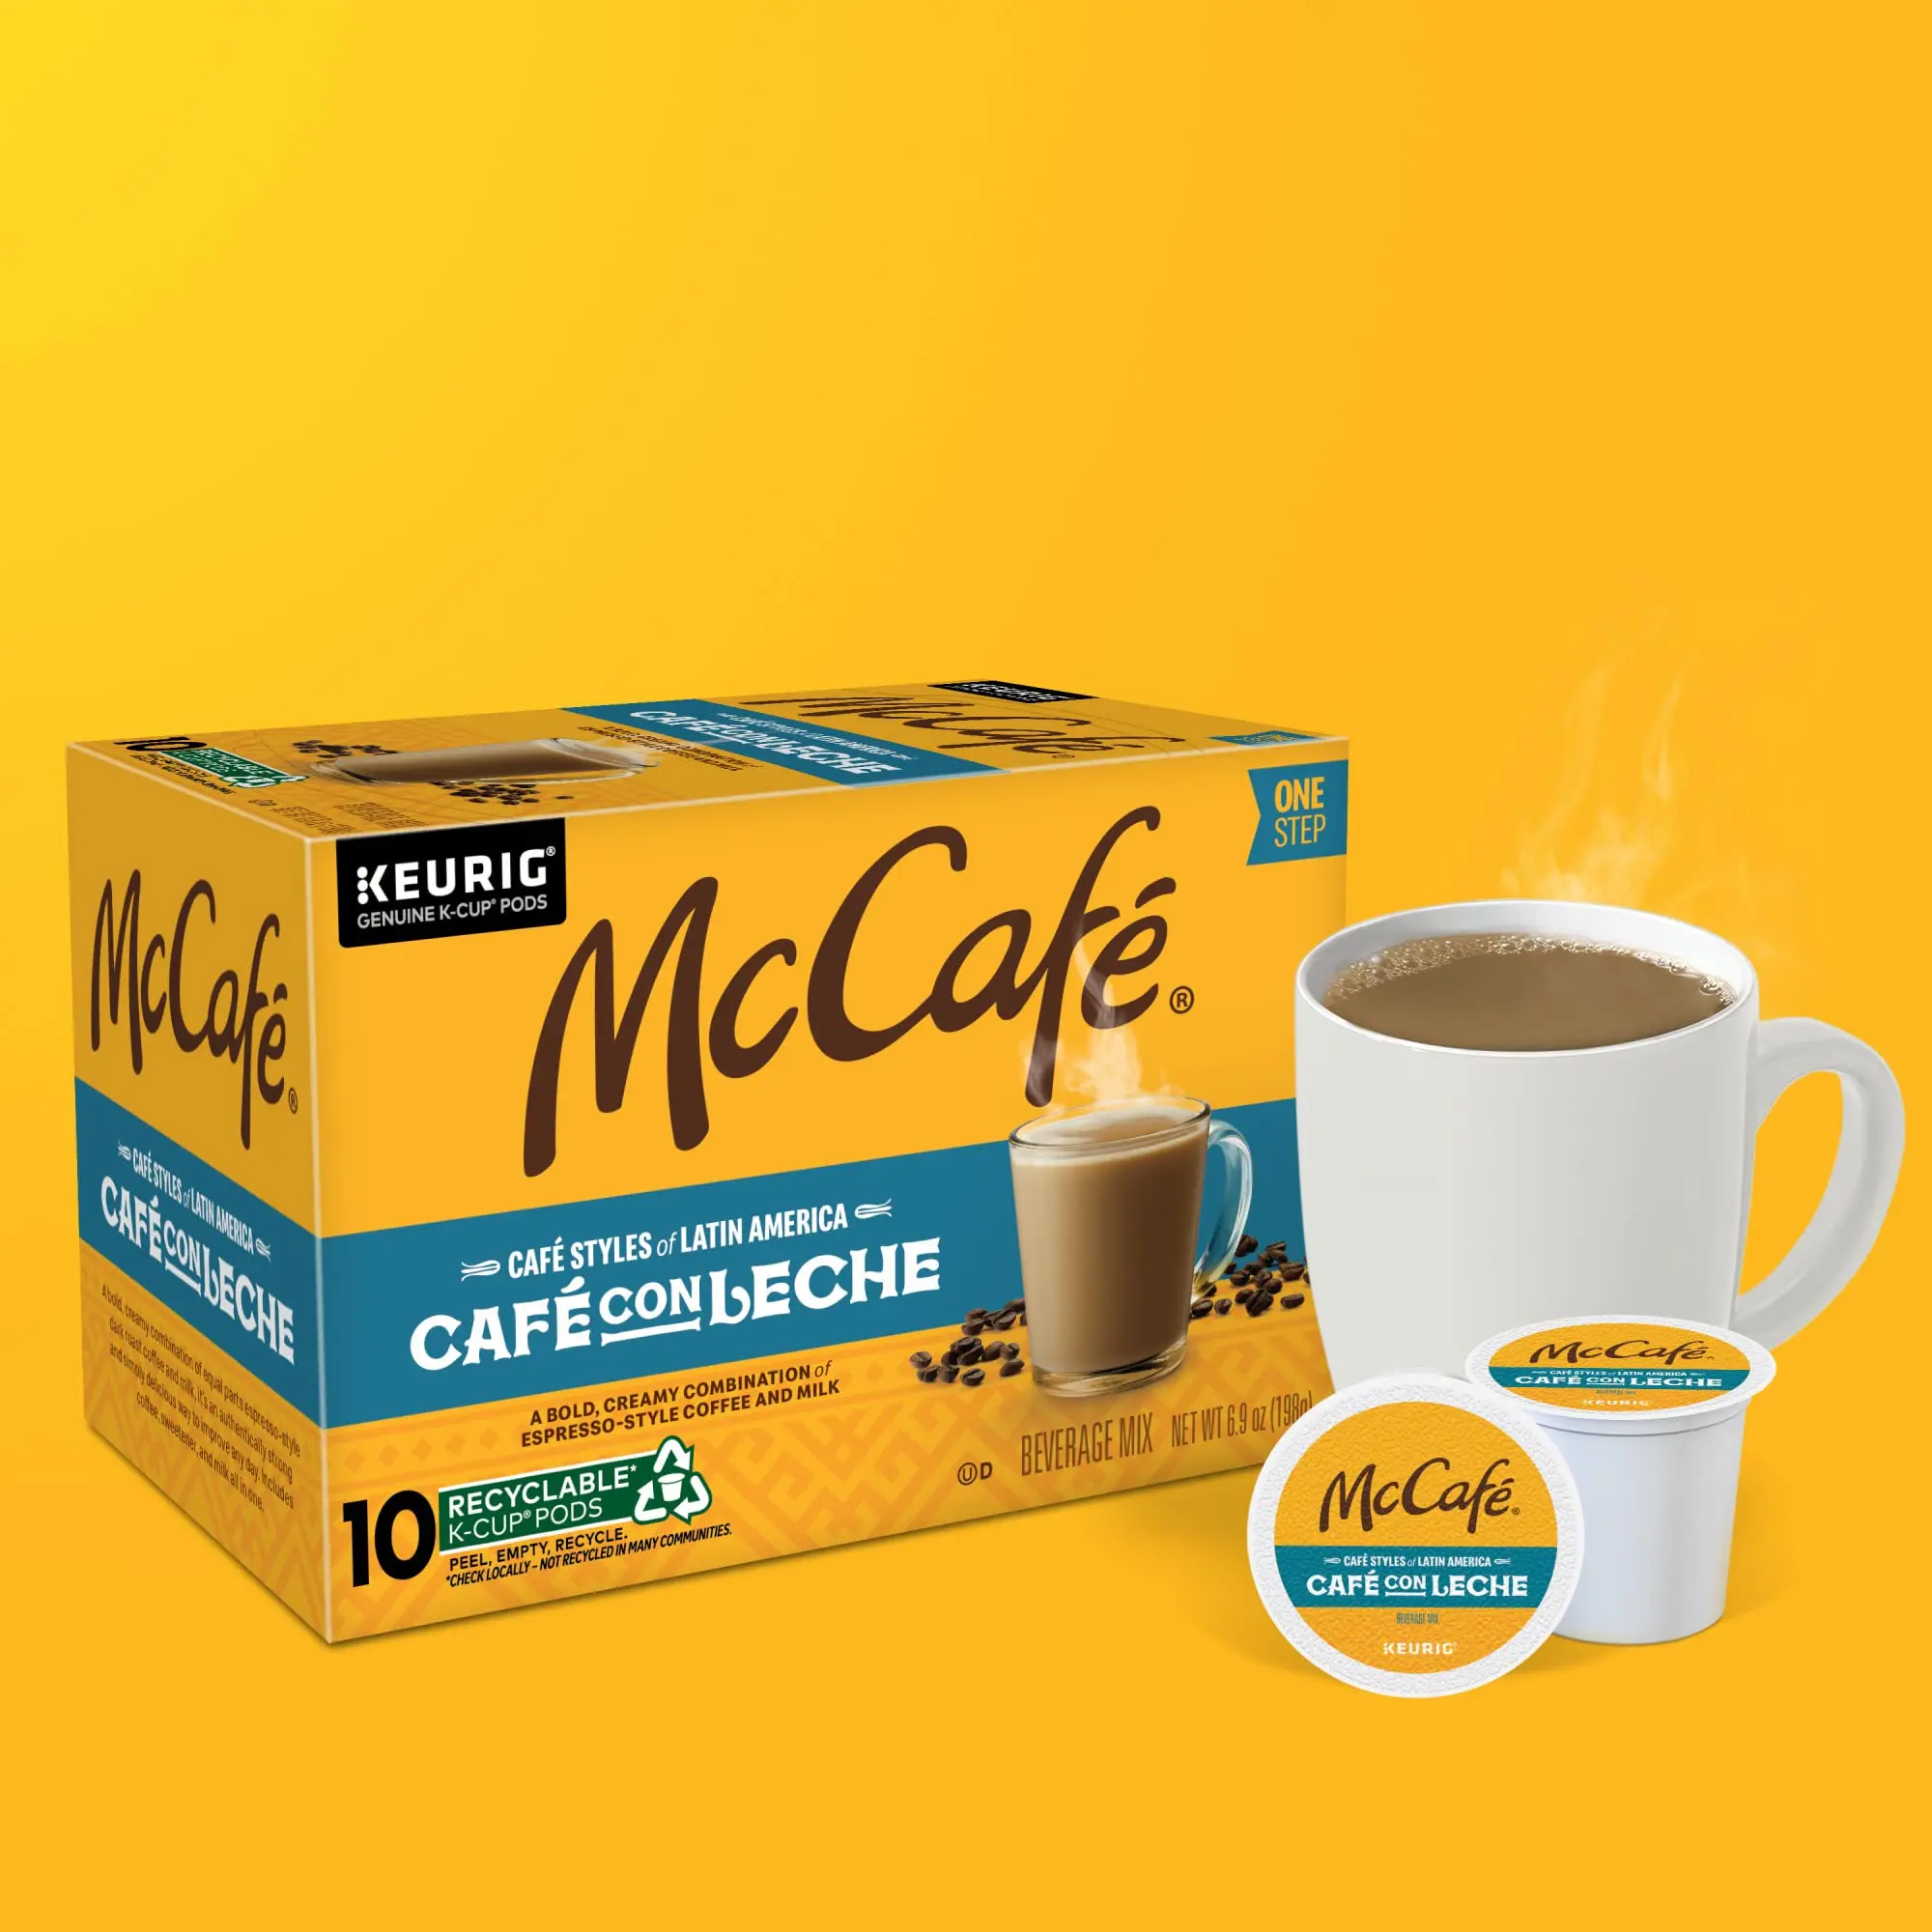 cafe con leche mcdonalds - Qué café es el de Mcdonalds